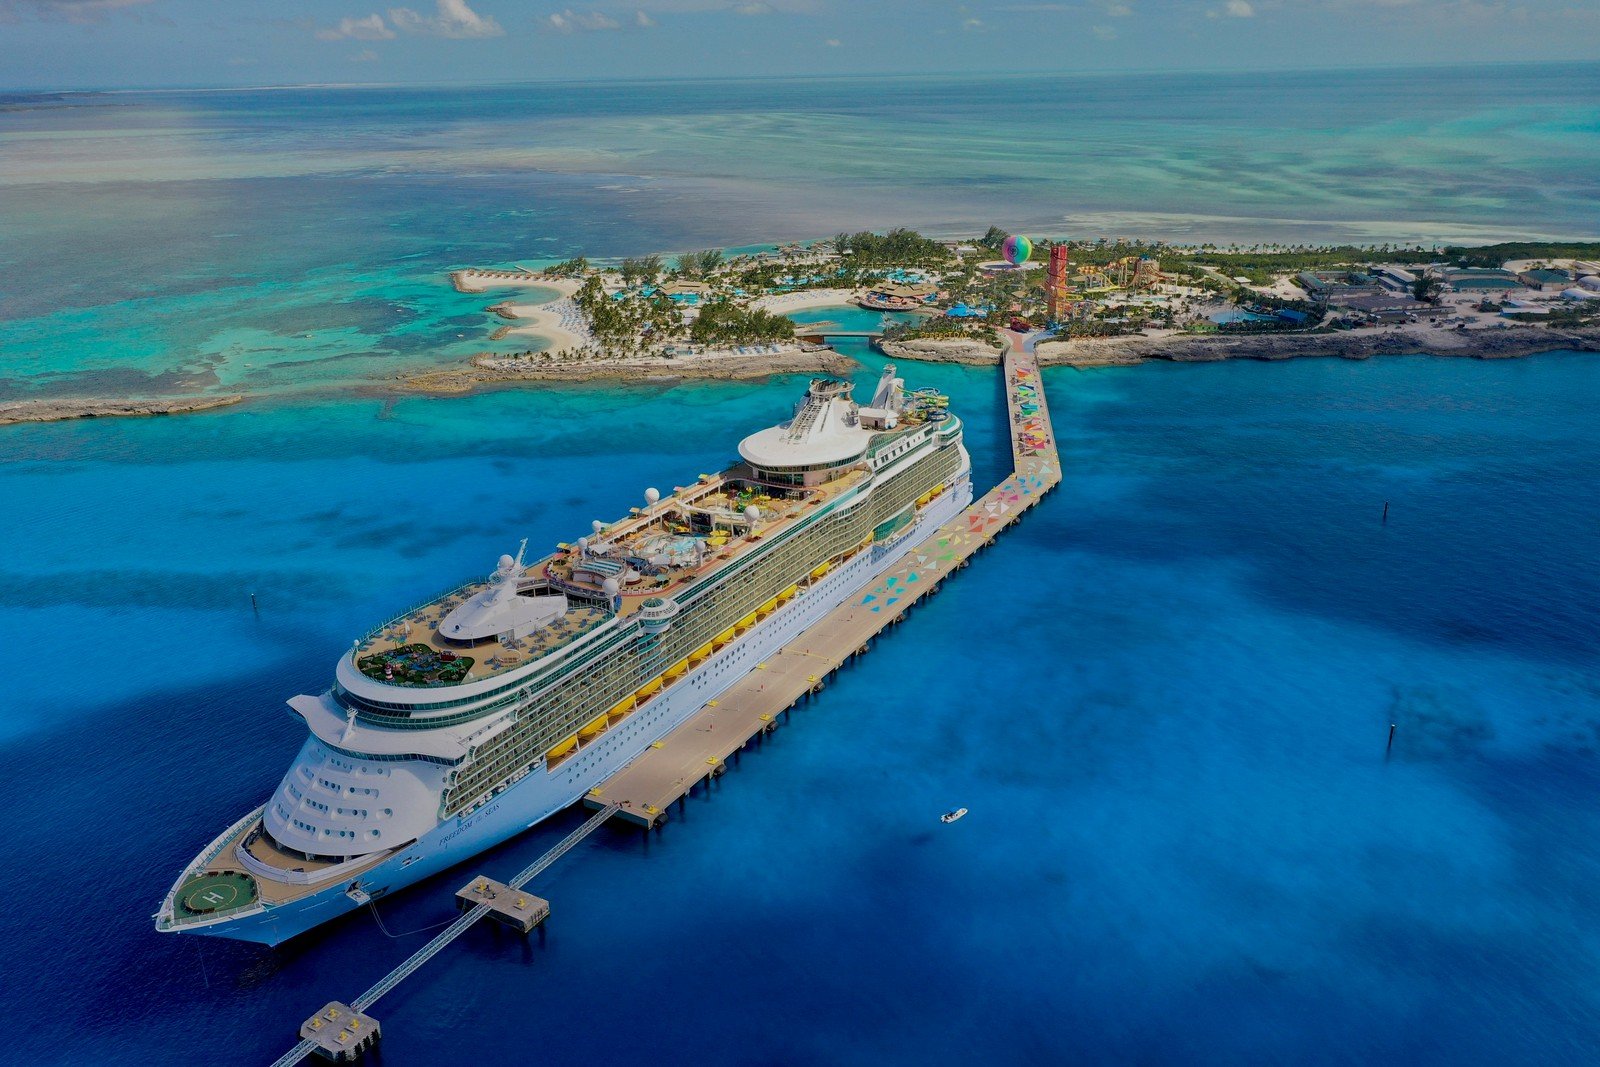 First Royal Caribbean test cruise should begin today | Royal Caribbean Blog